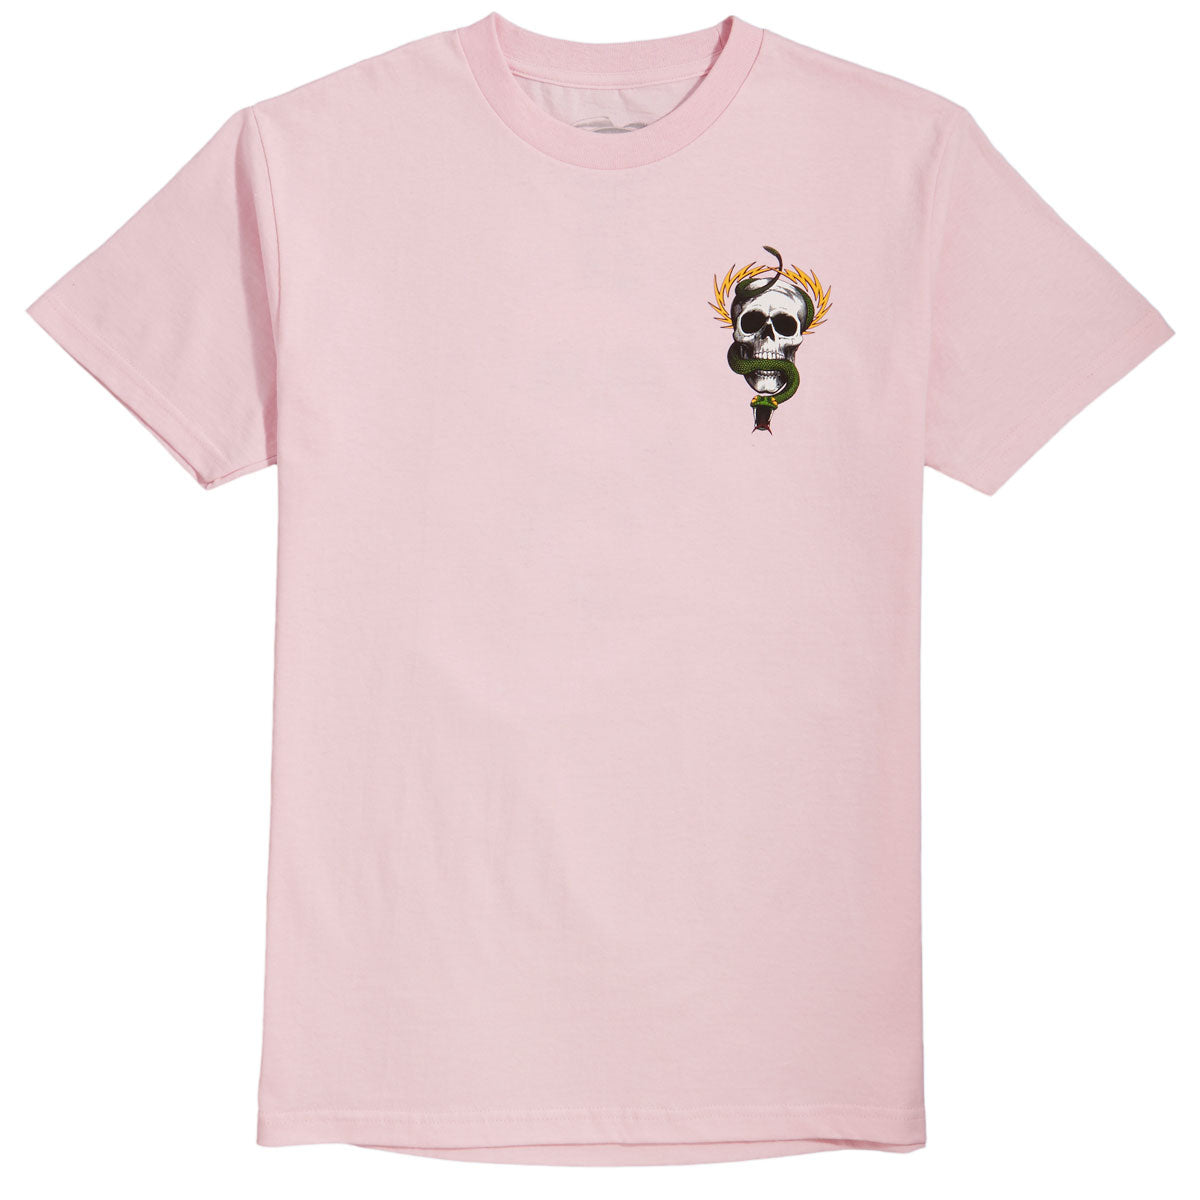 Powell-Peralta McGill Skull And Snake T-Shirt - Light Pink image 1